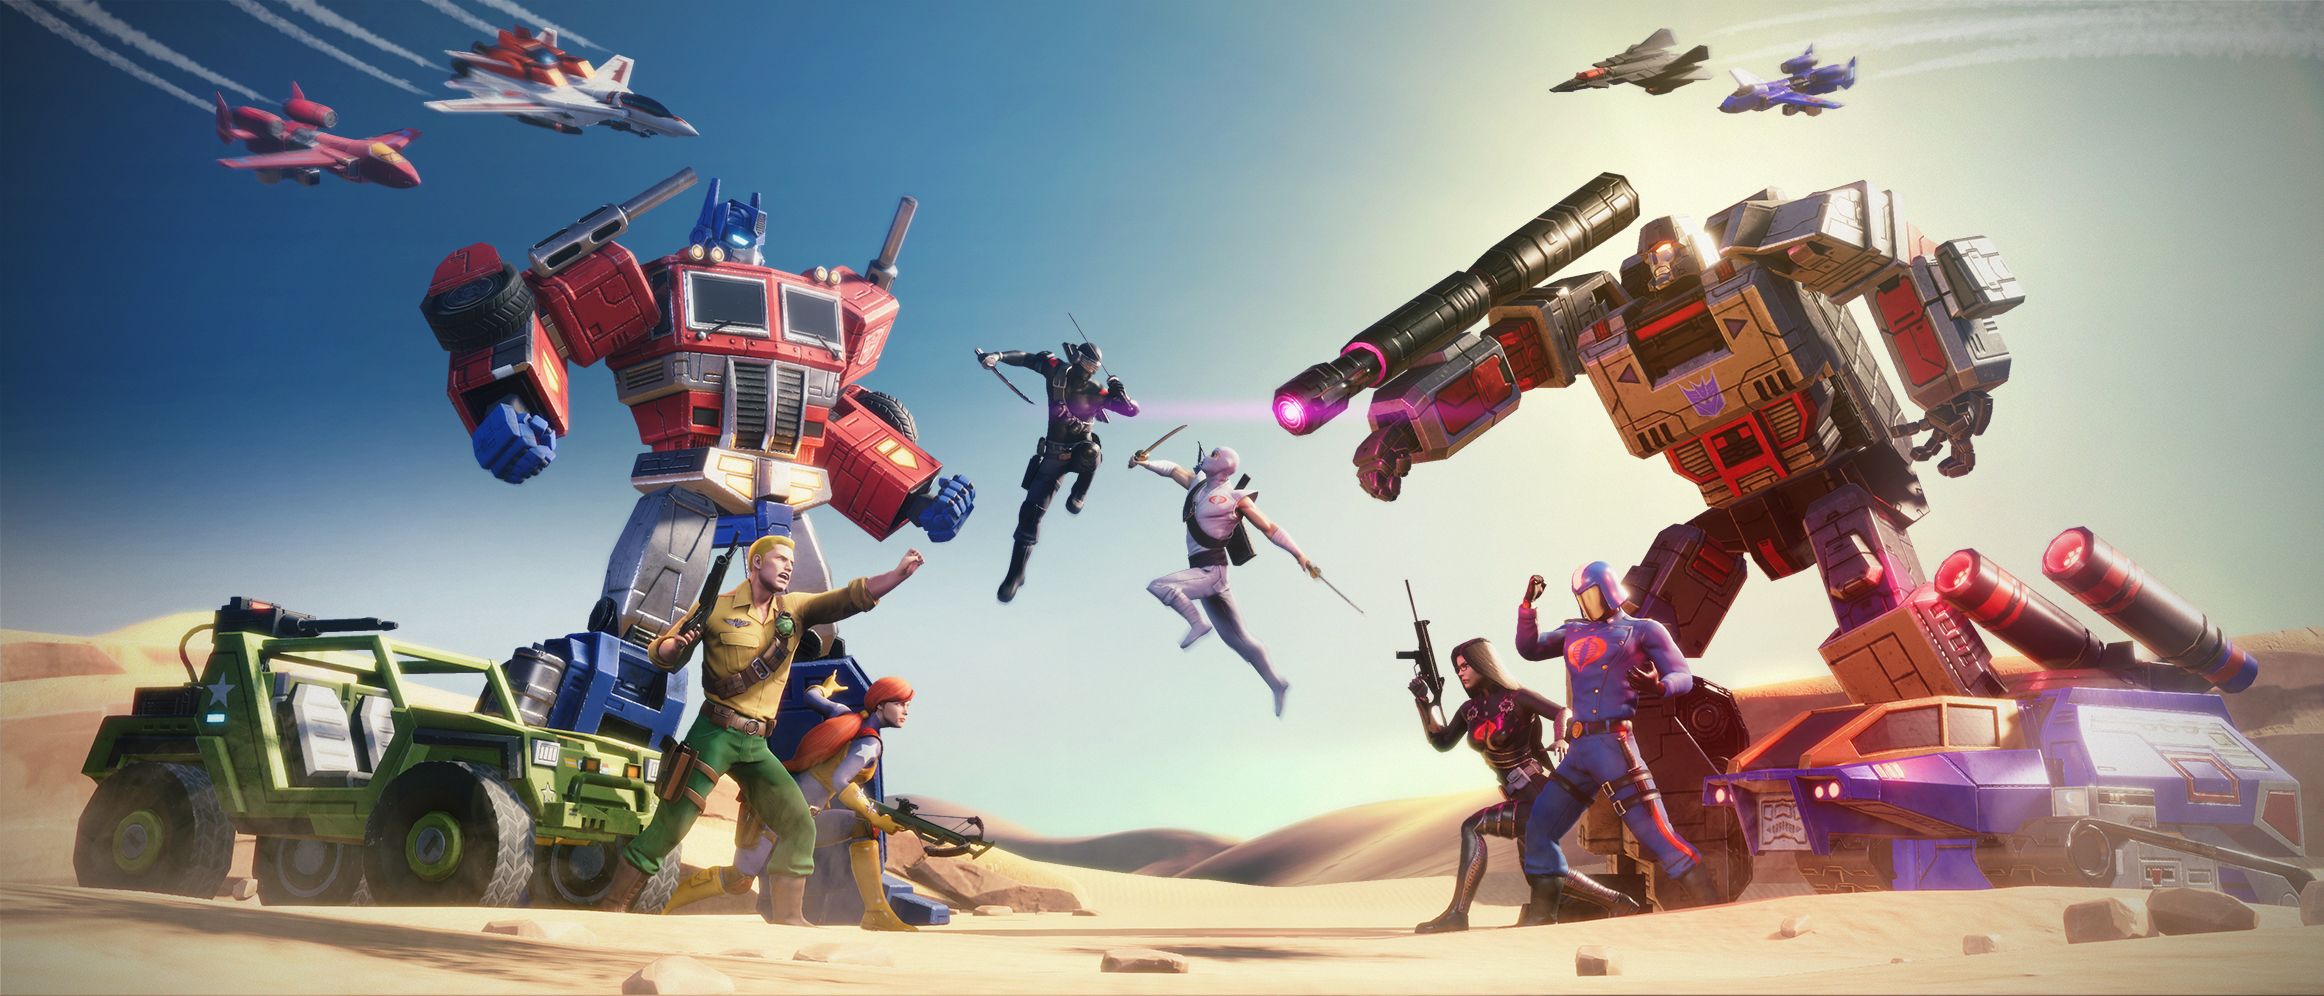 Earth Wars Gi Joe And Cobra Battle The Transformers In New Trailer